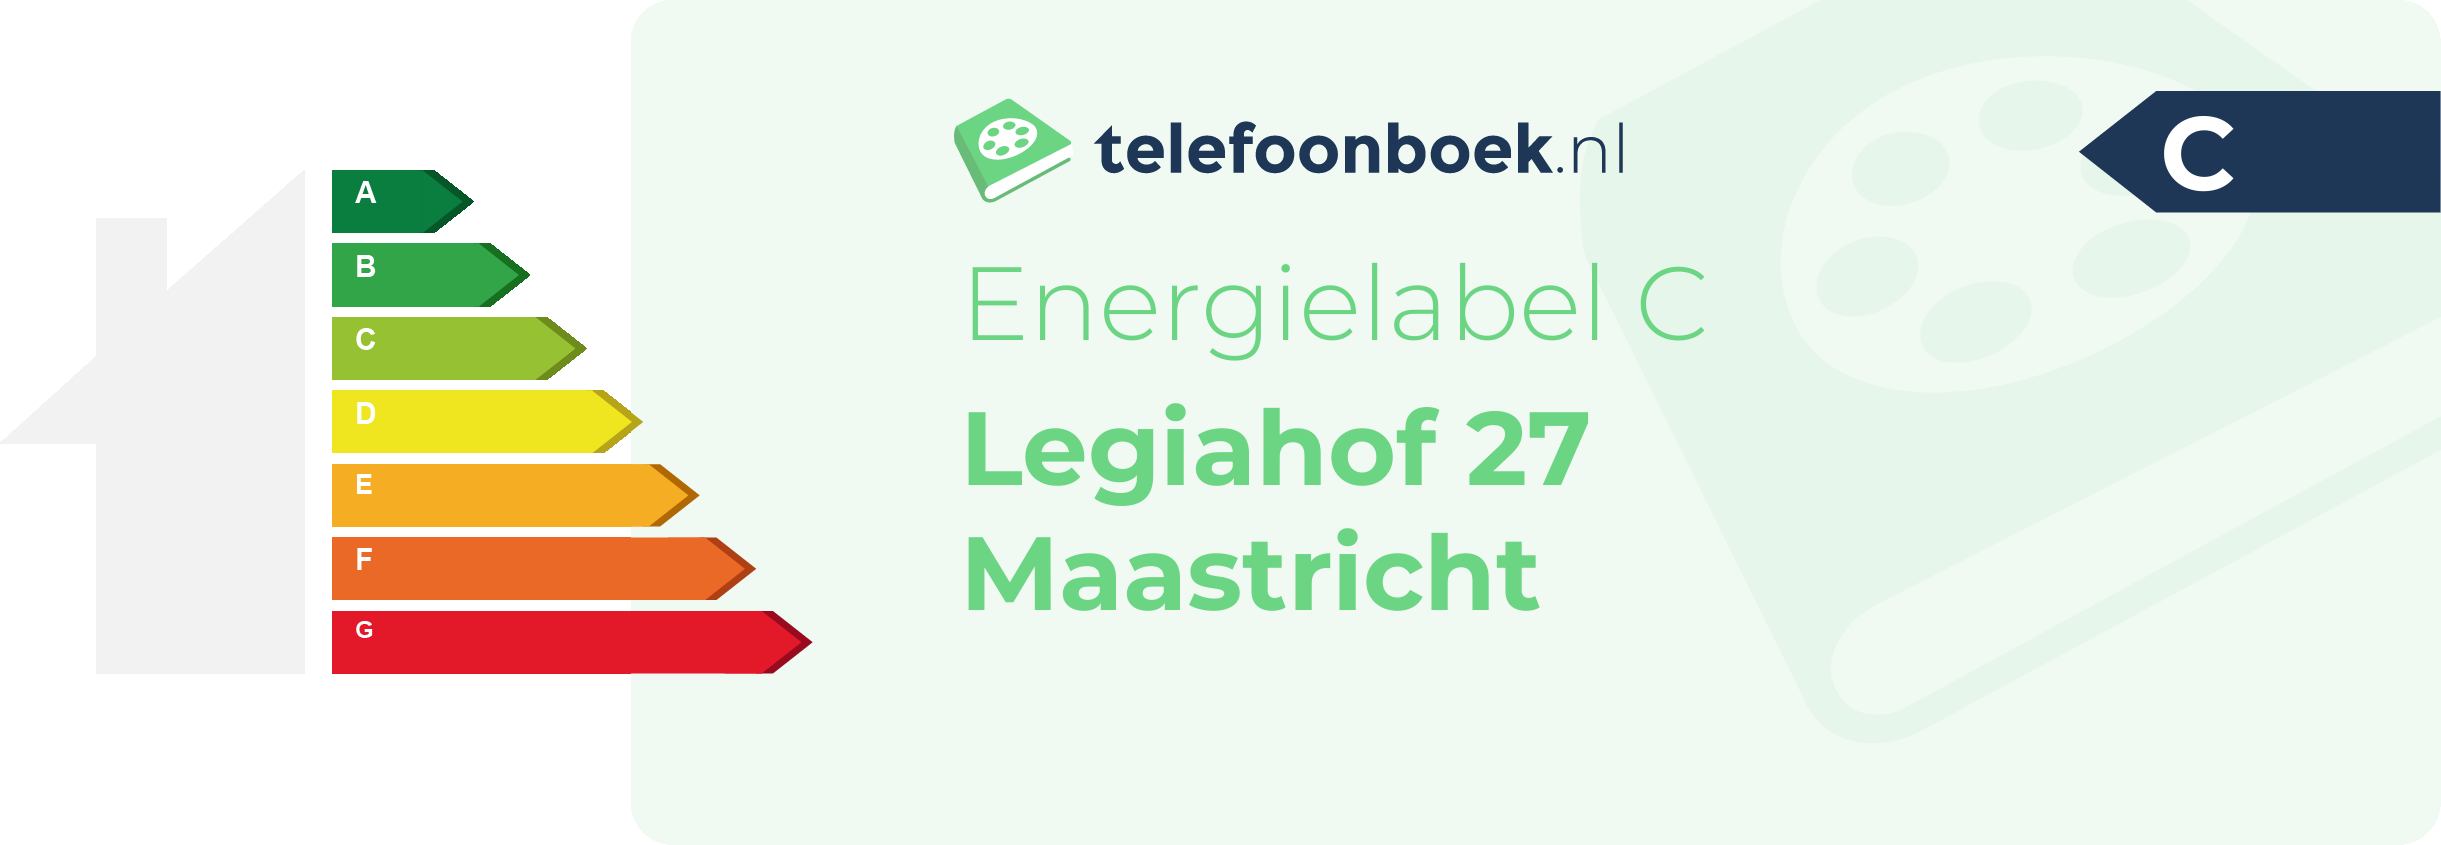 Energielabel Legiahof 27 Maastricht